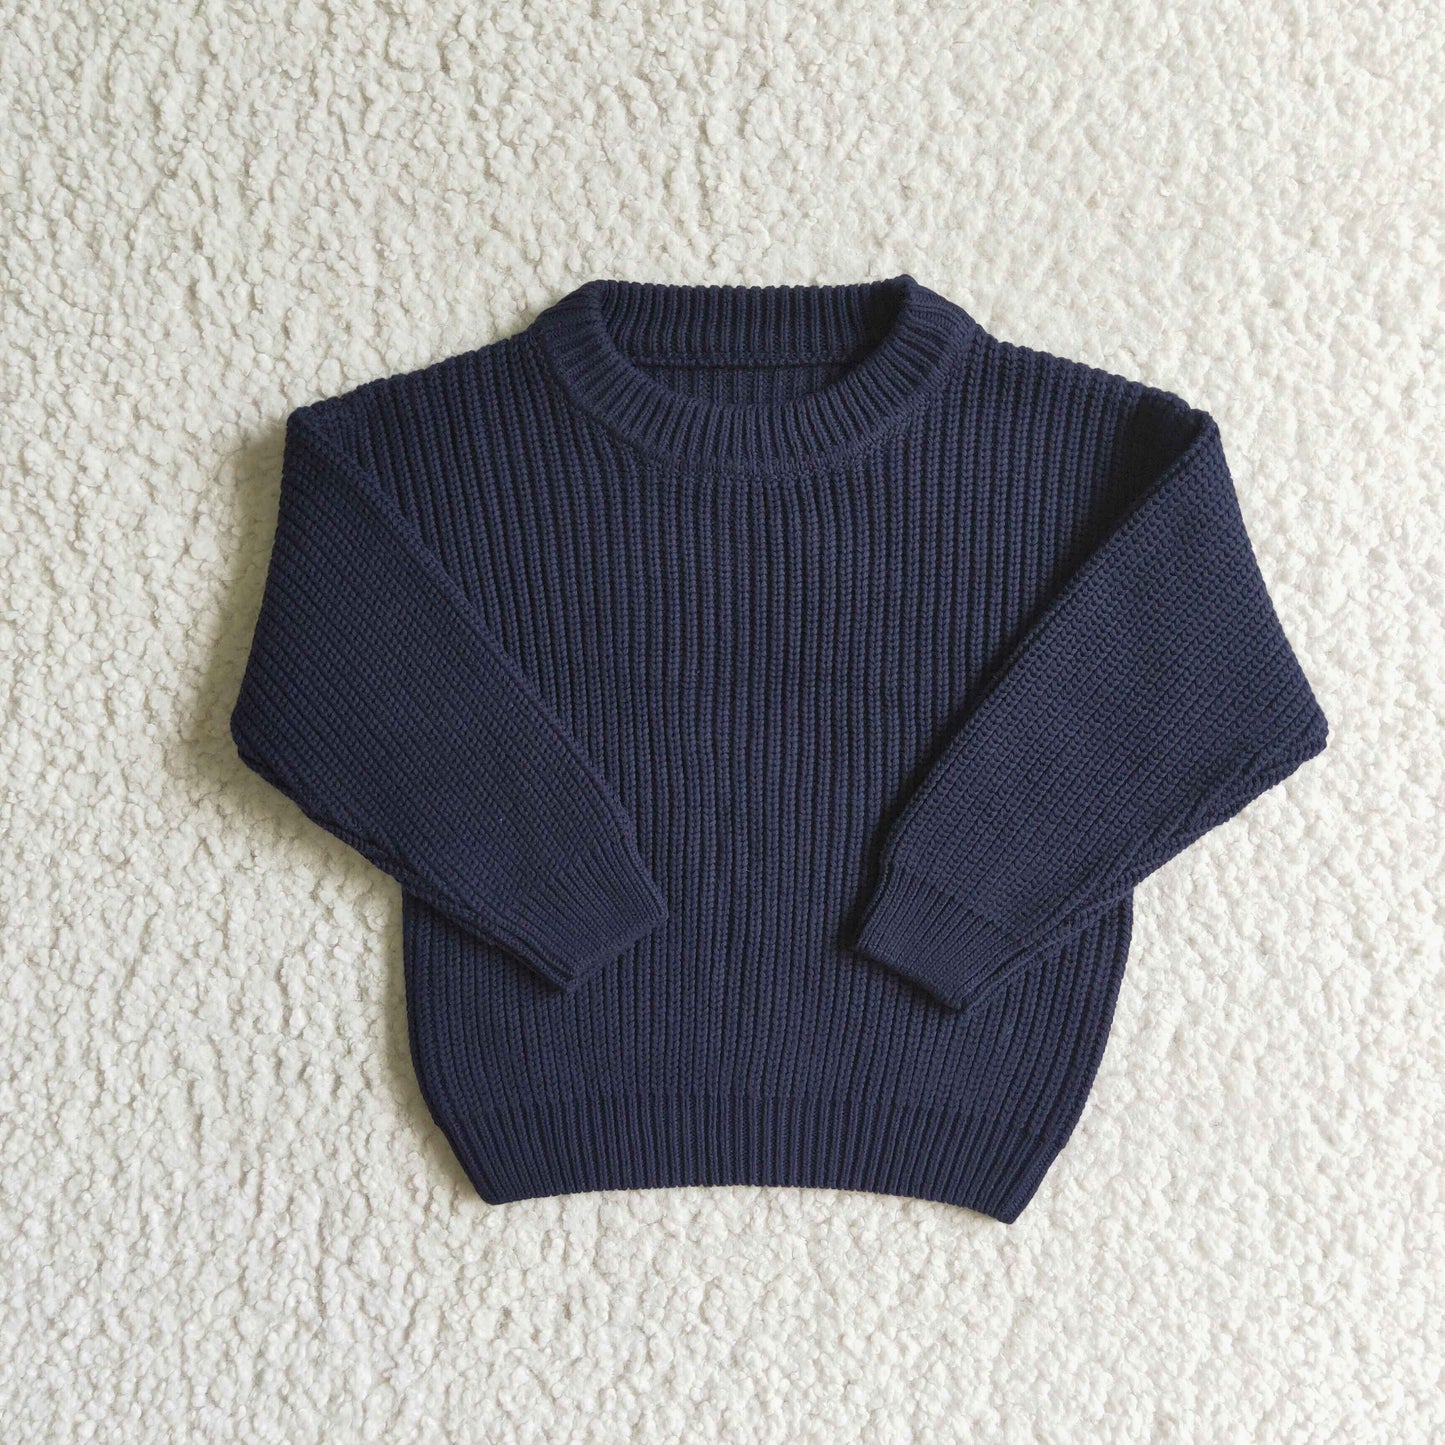 Navy cotton winter sweater